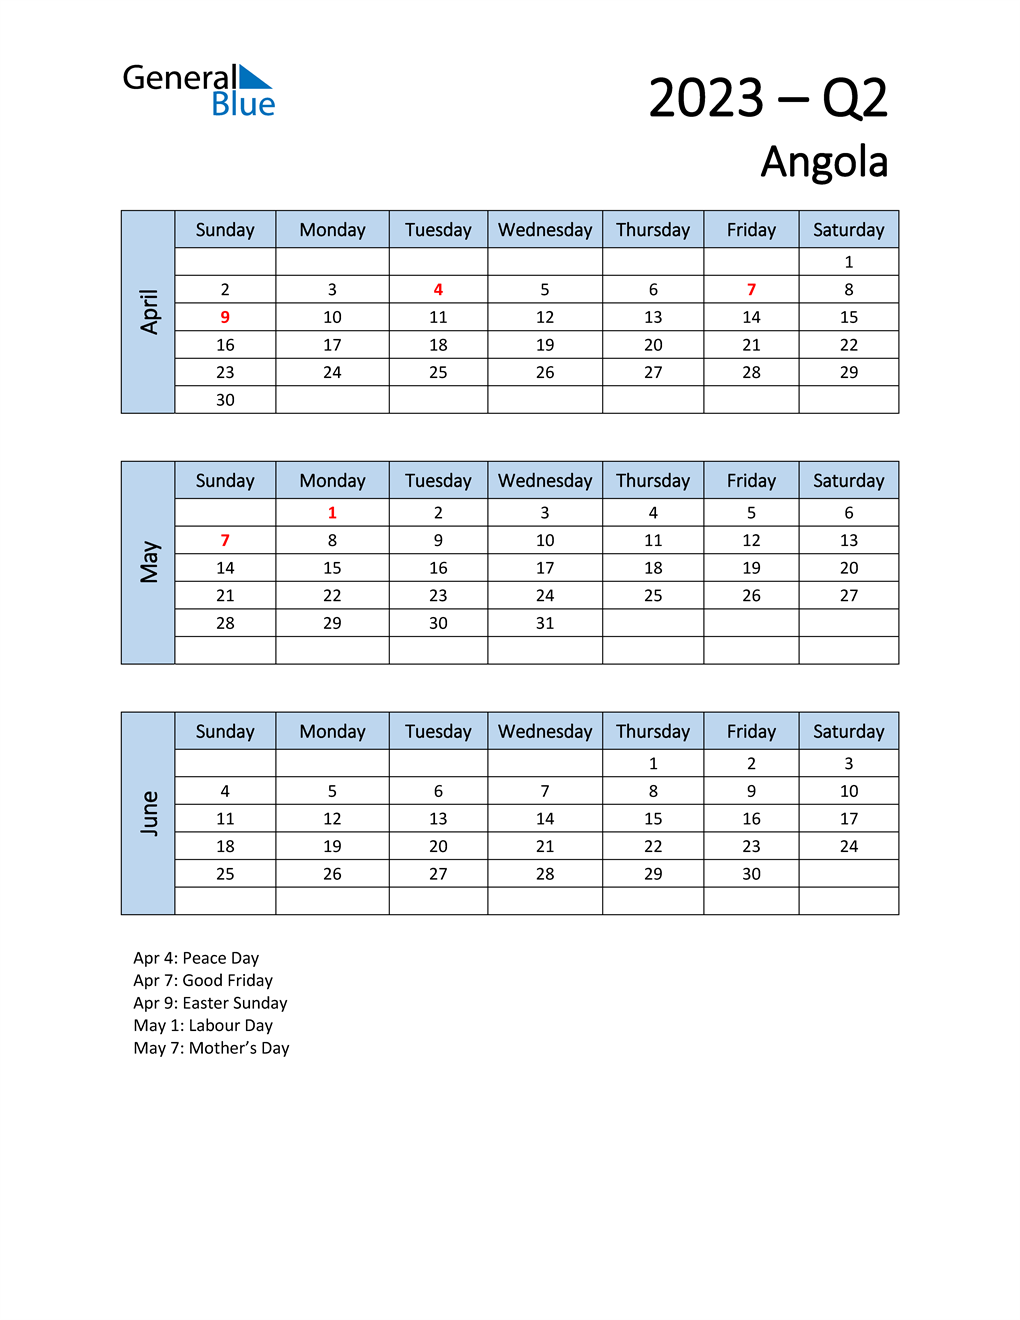  Free Q2 2023 Calendar for Angola